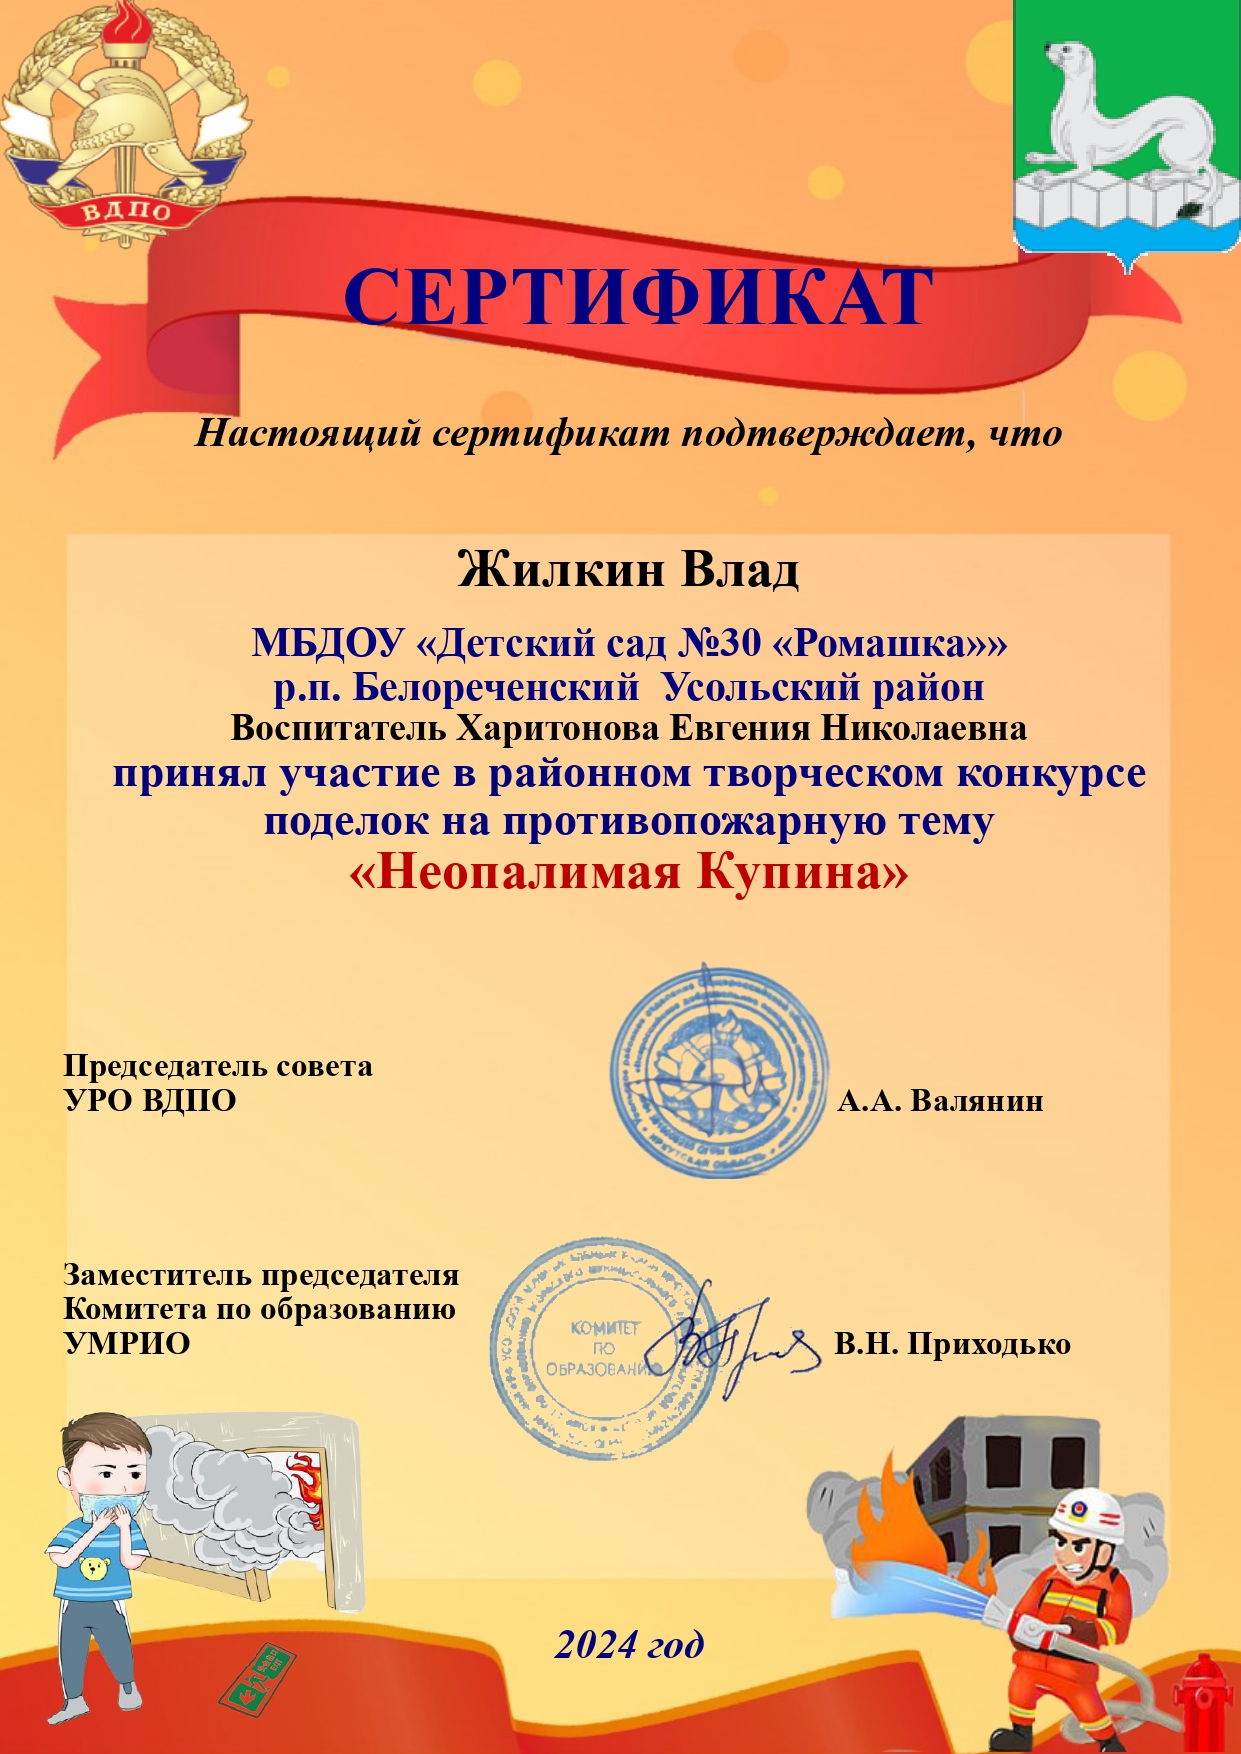 Сертификат поделка Жилкин Влад д. сад 30 page 0001 1